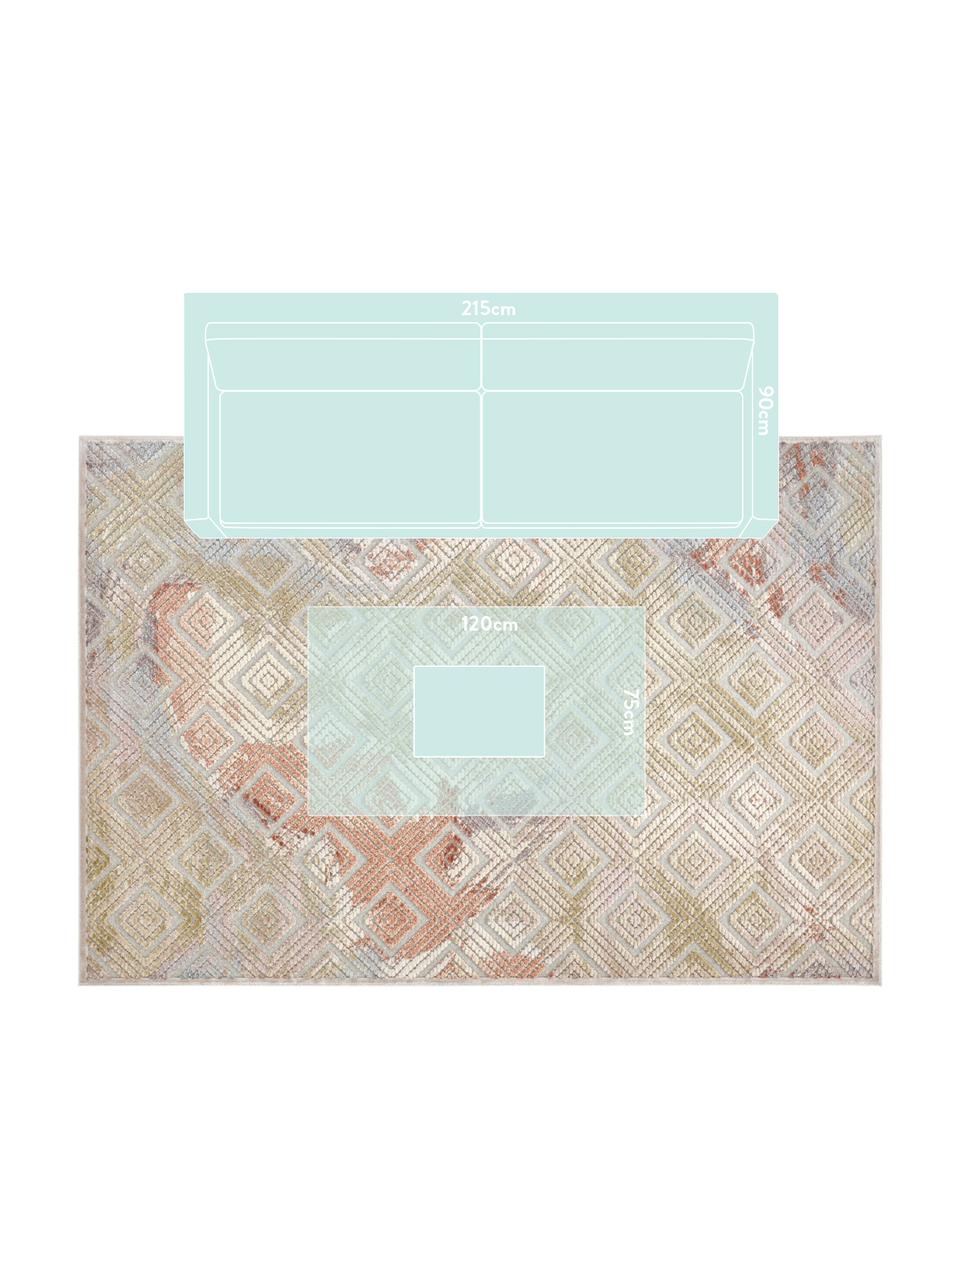 Viskose-Teppich Isère mit Hoch-Tief-Effekt, Flor: 90% Viskose, 10% Polyeste, Silbergrau, Mehrfarbig, B 200 x L 300 cm (Grösse L)